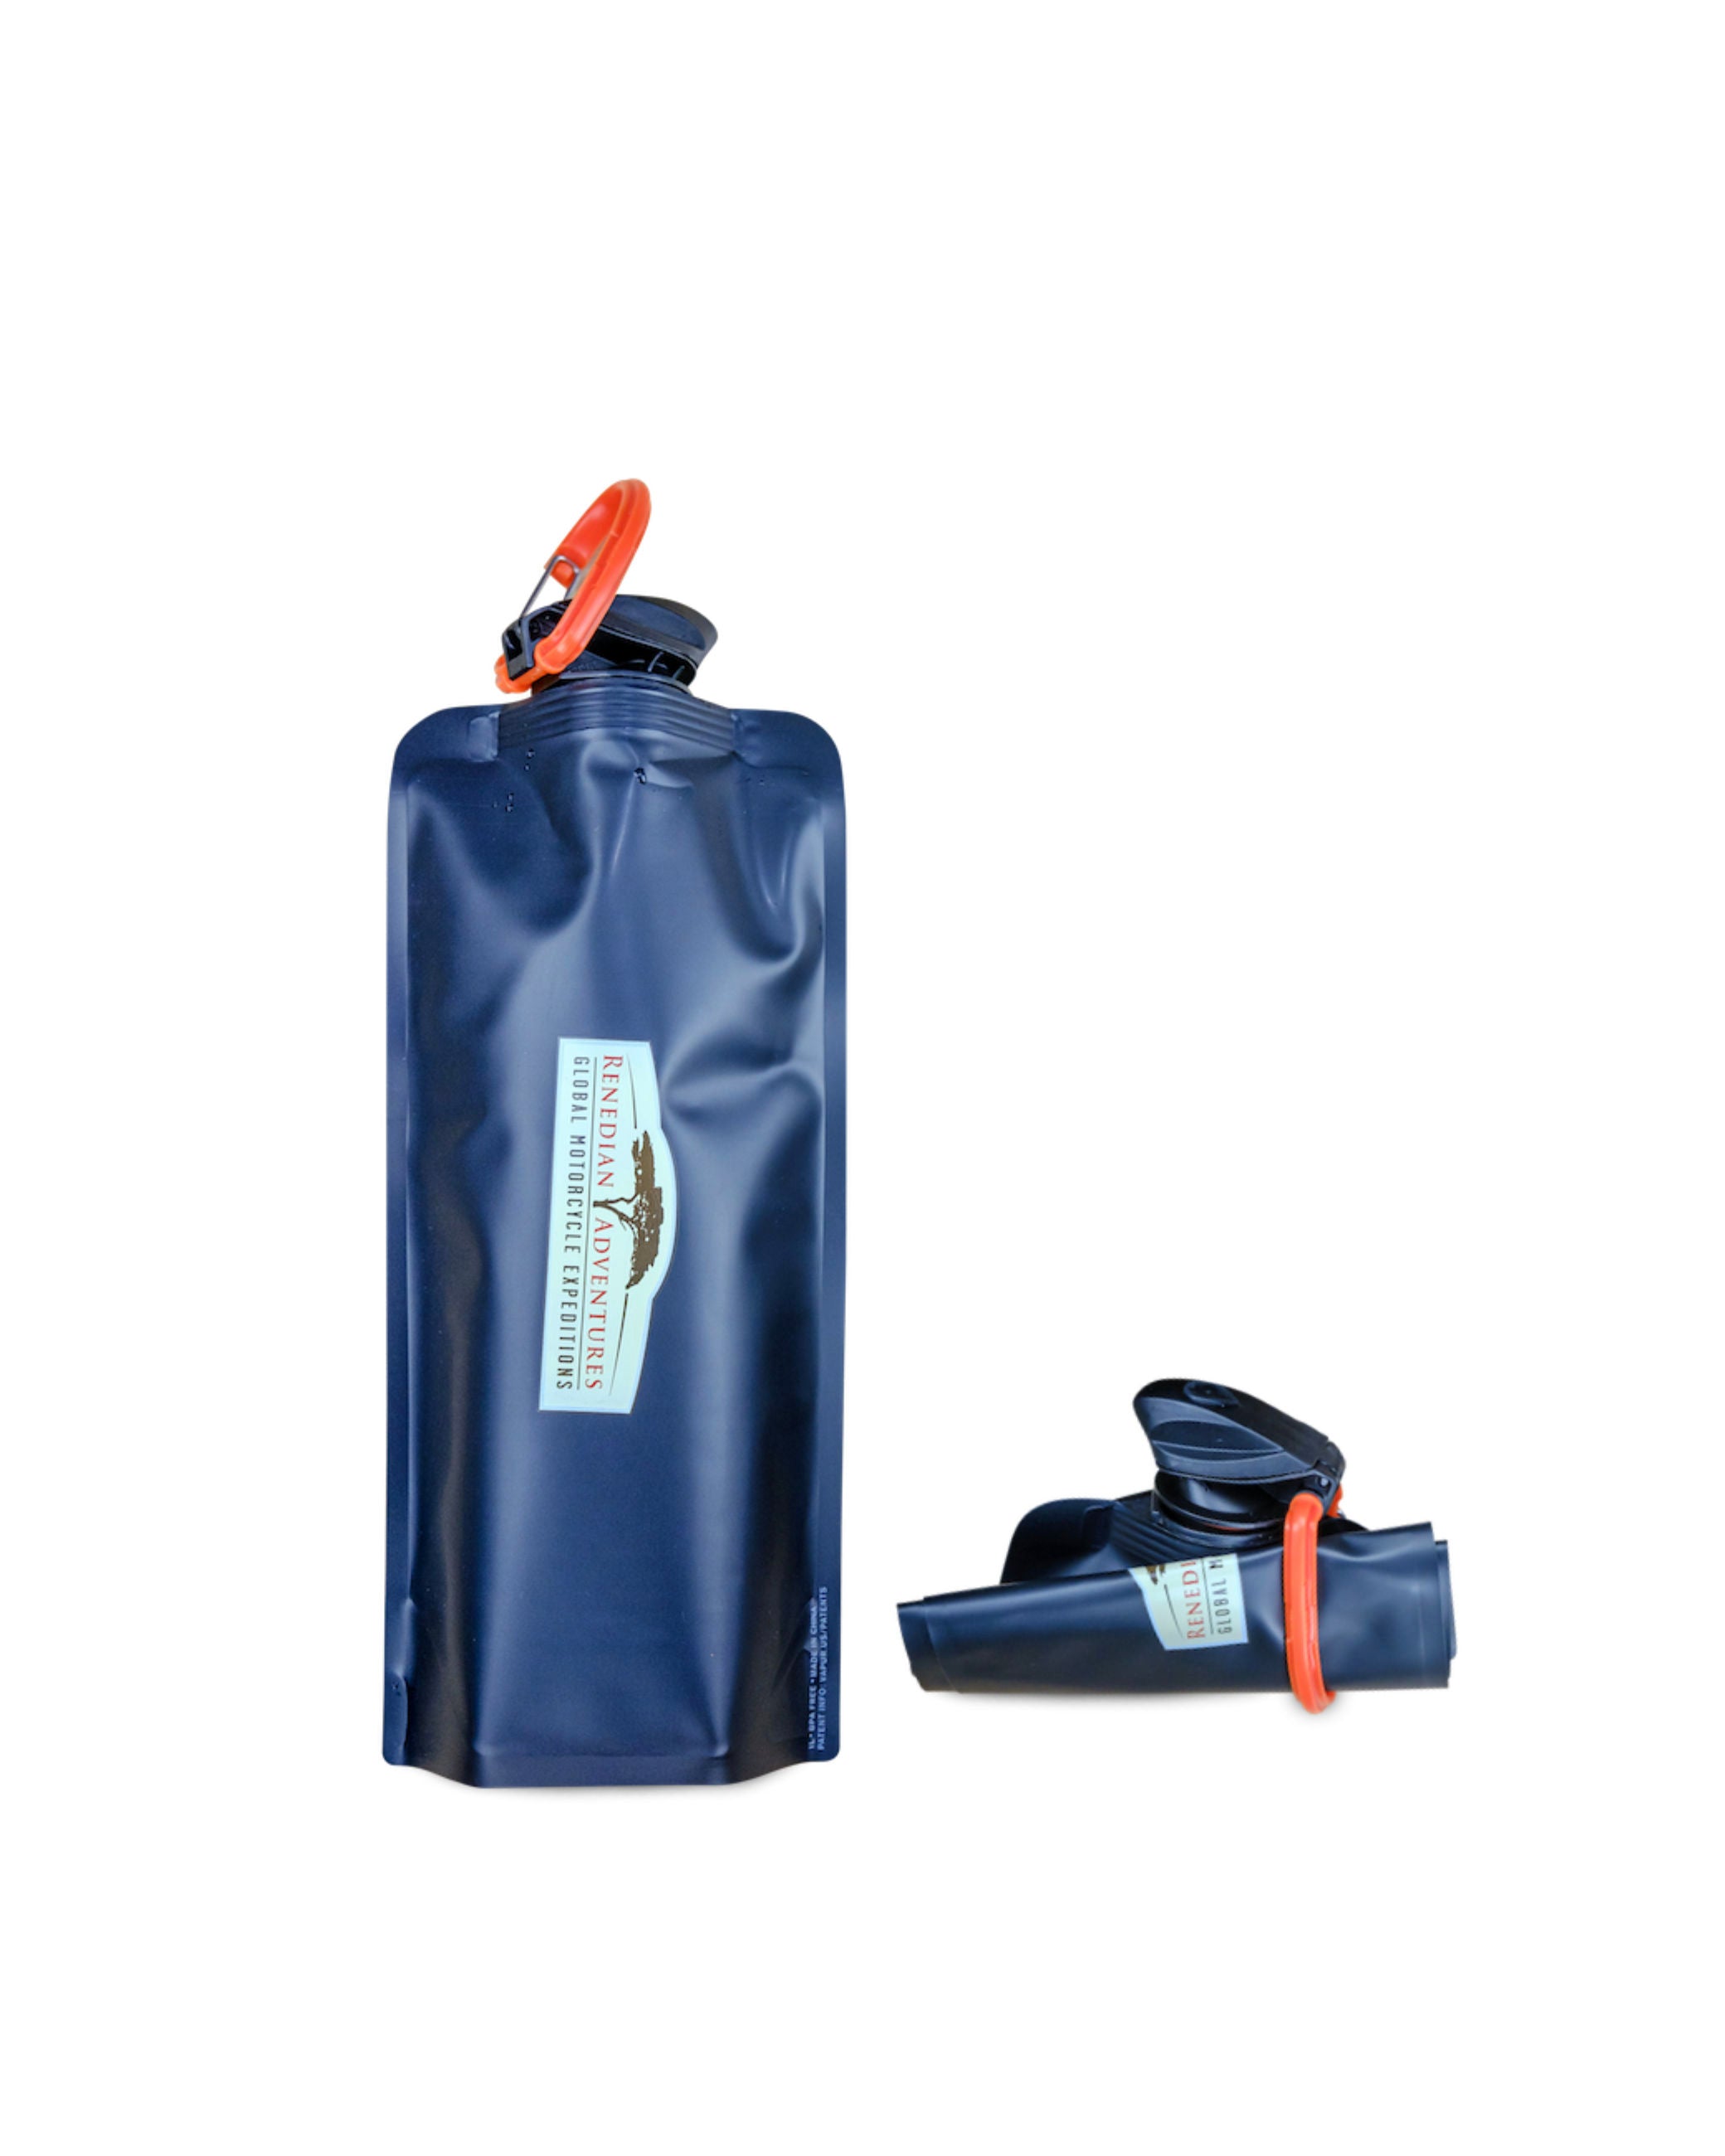 Tedlar Bags with PTFE Fitting - MediSense | Smelltest.eu